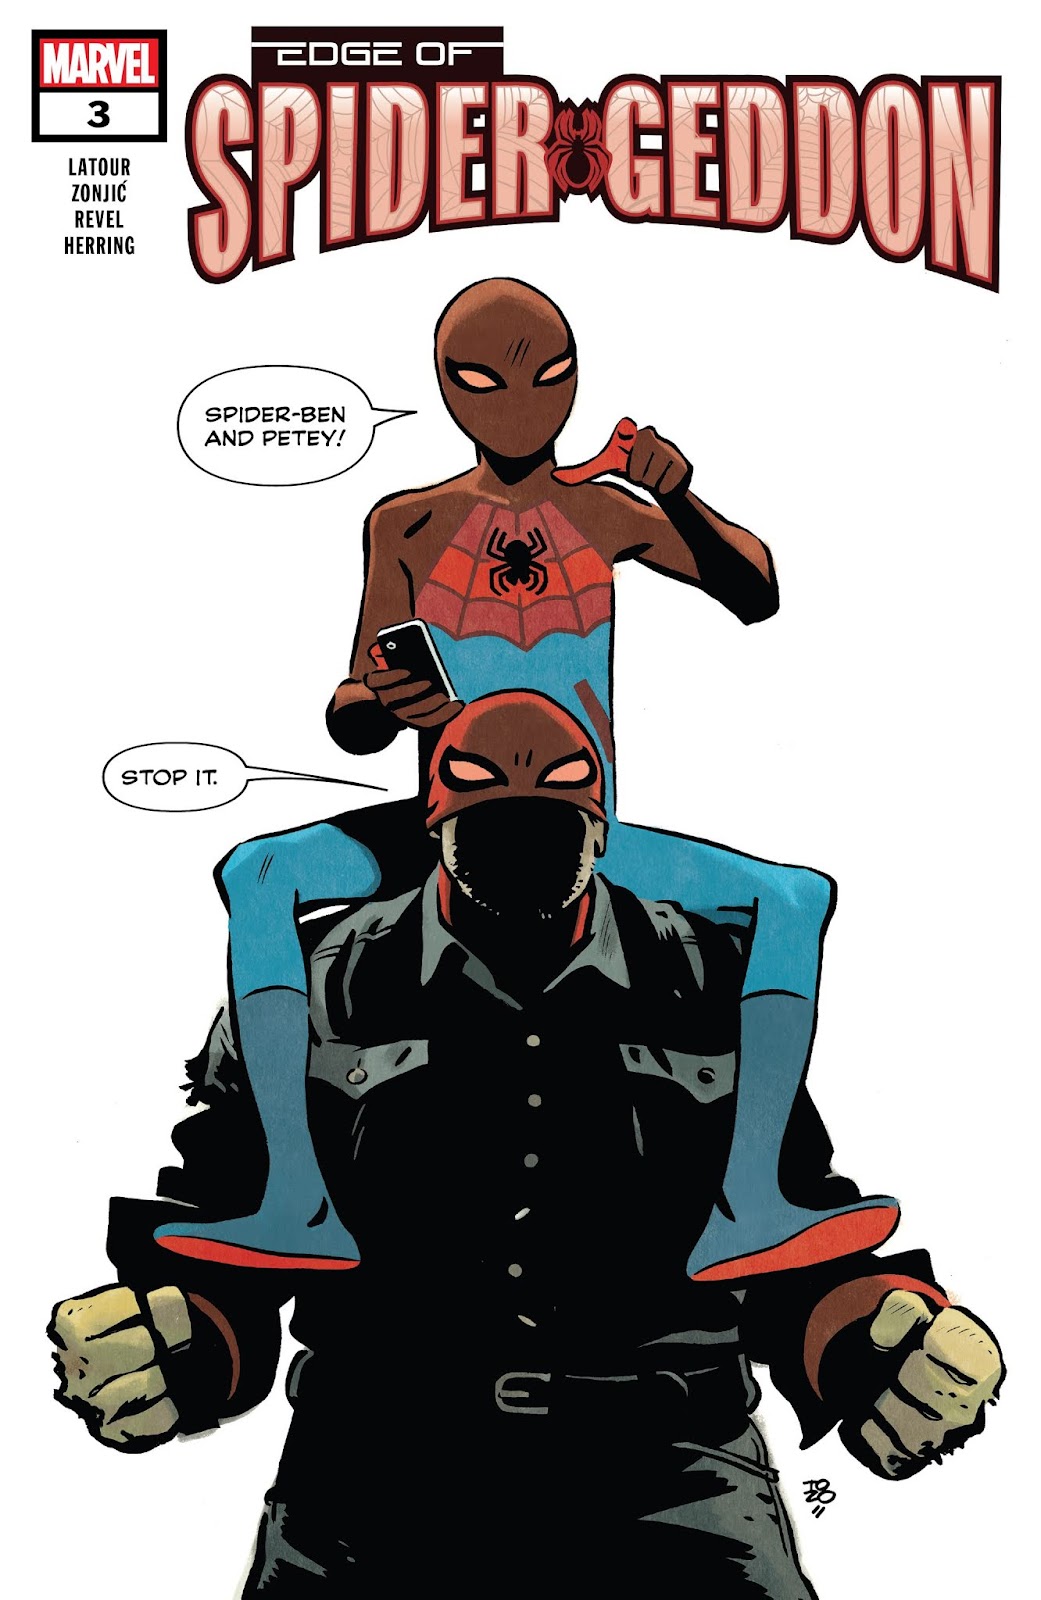 Edge of Spider-Geddon issue 3 - Page 1